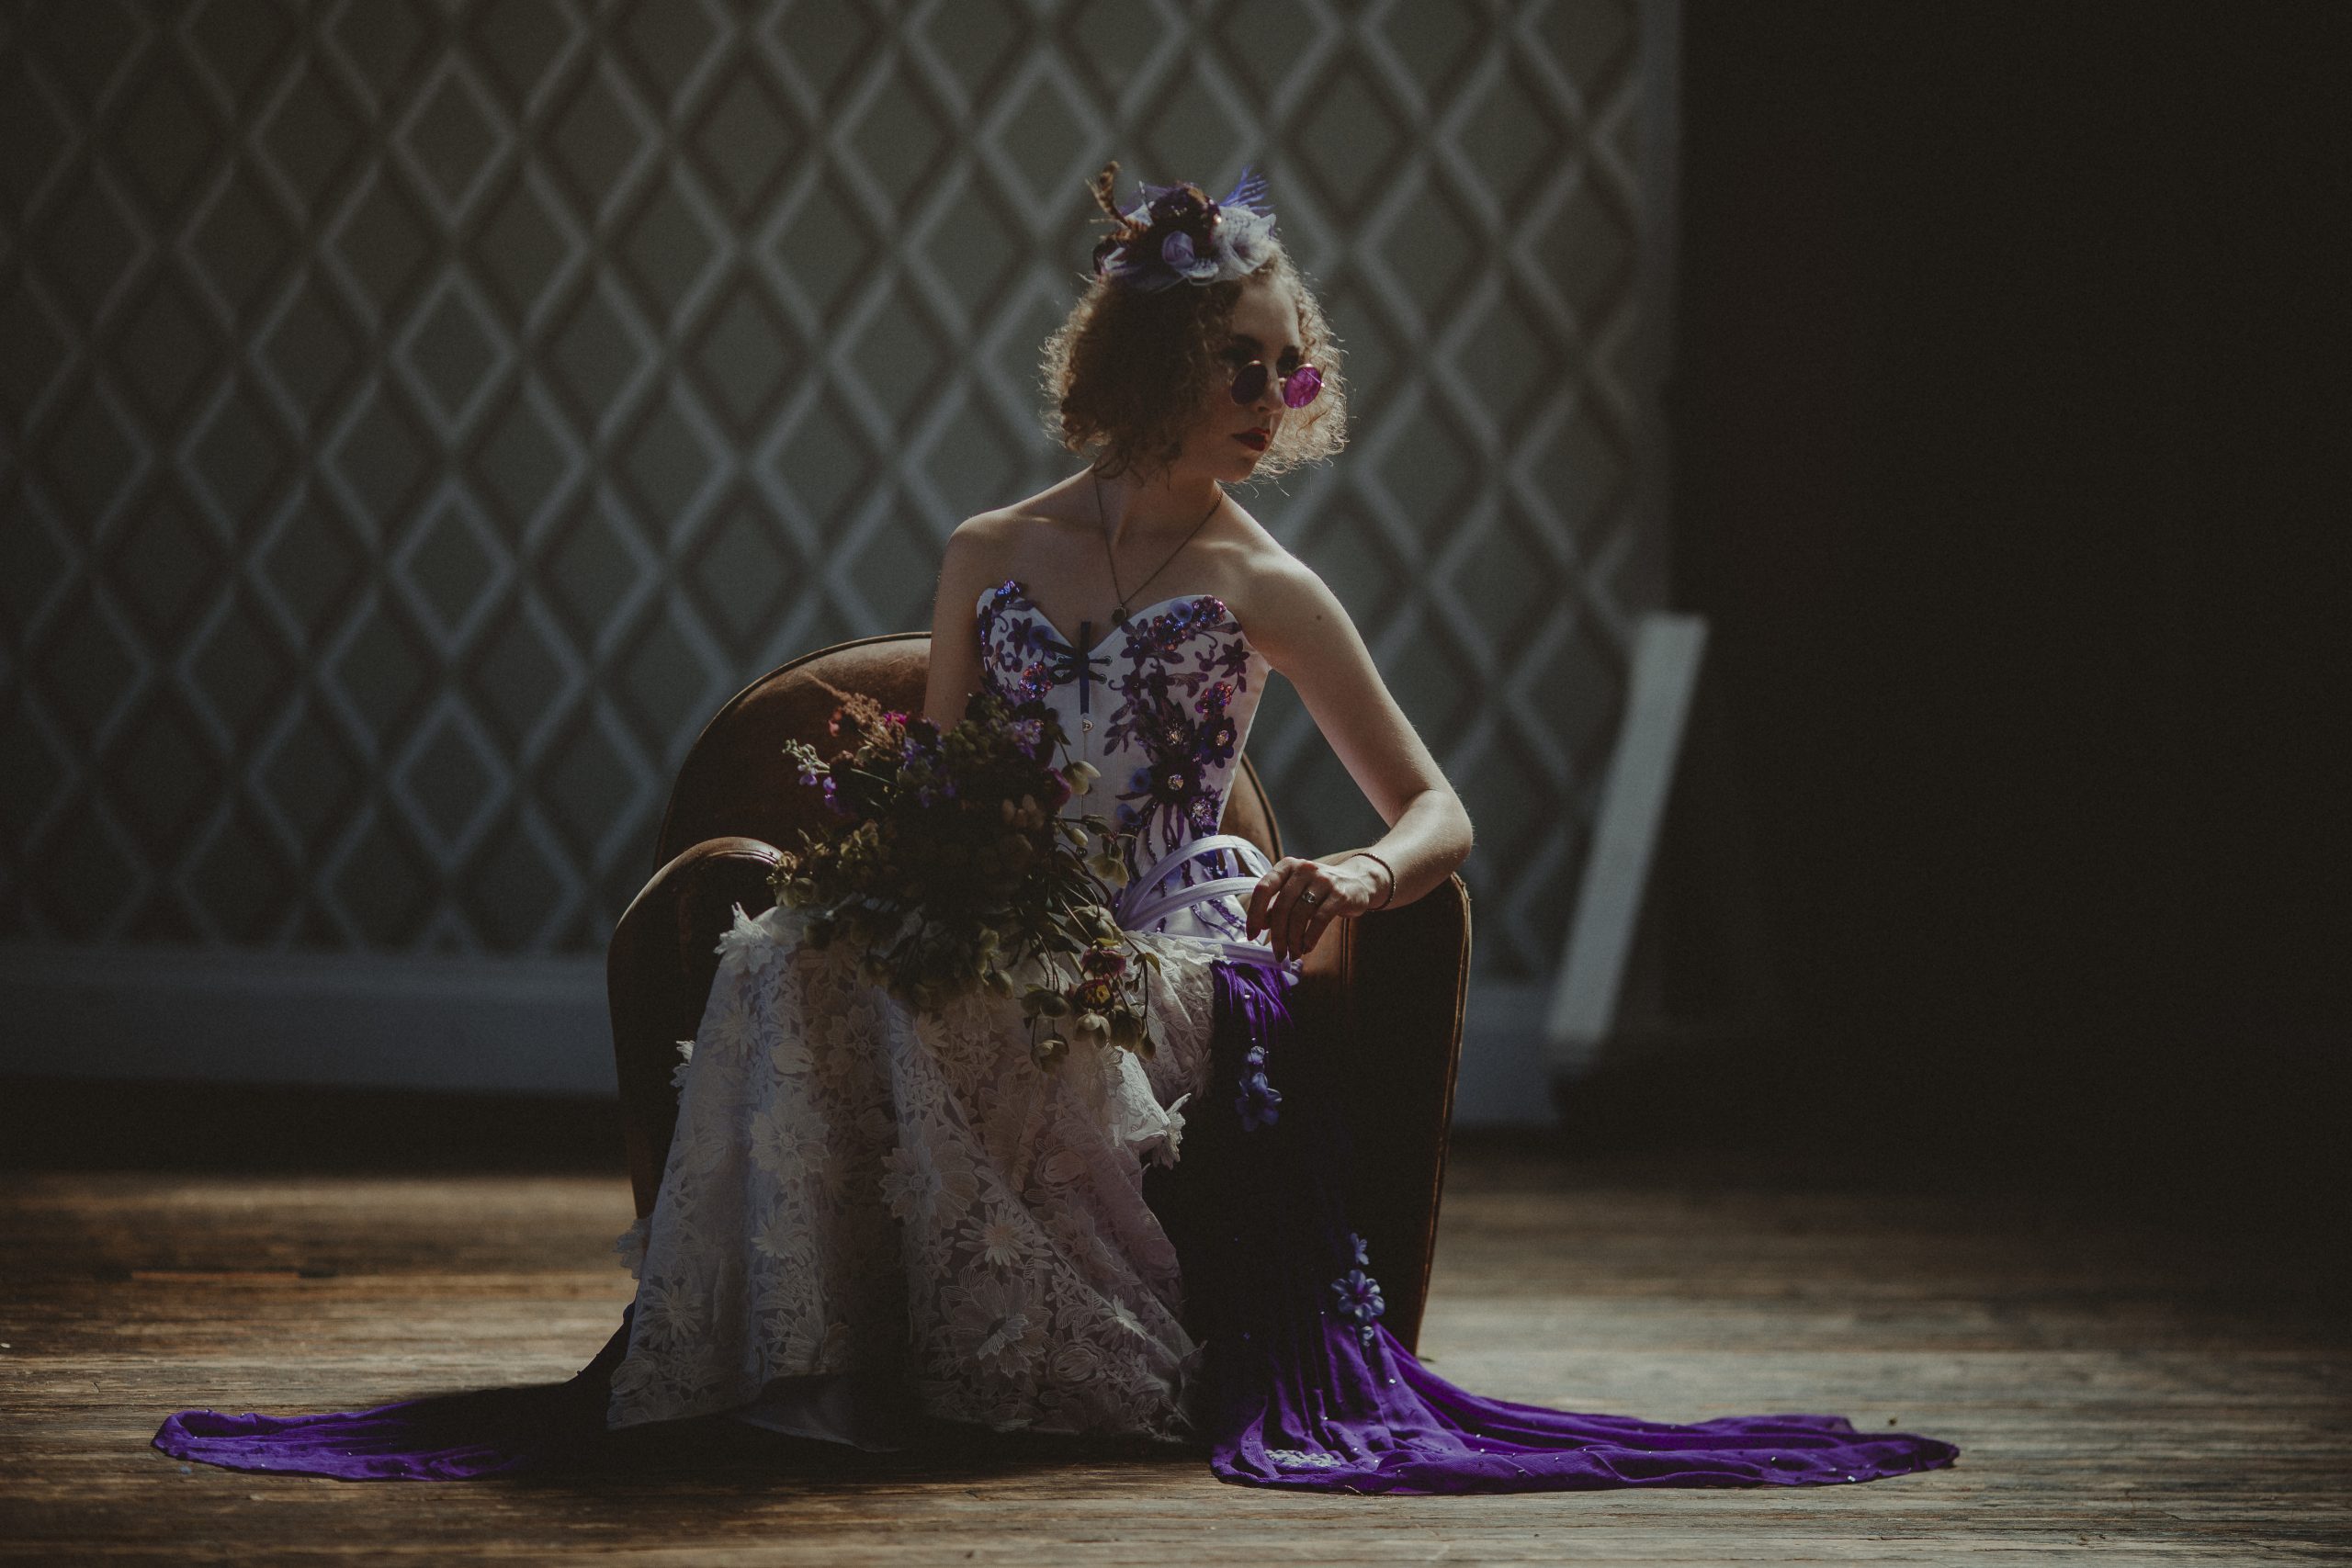 Violet Bridal Gown